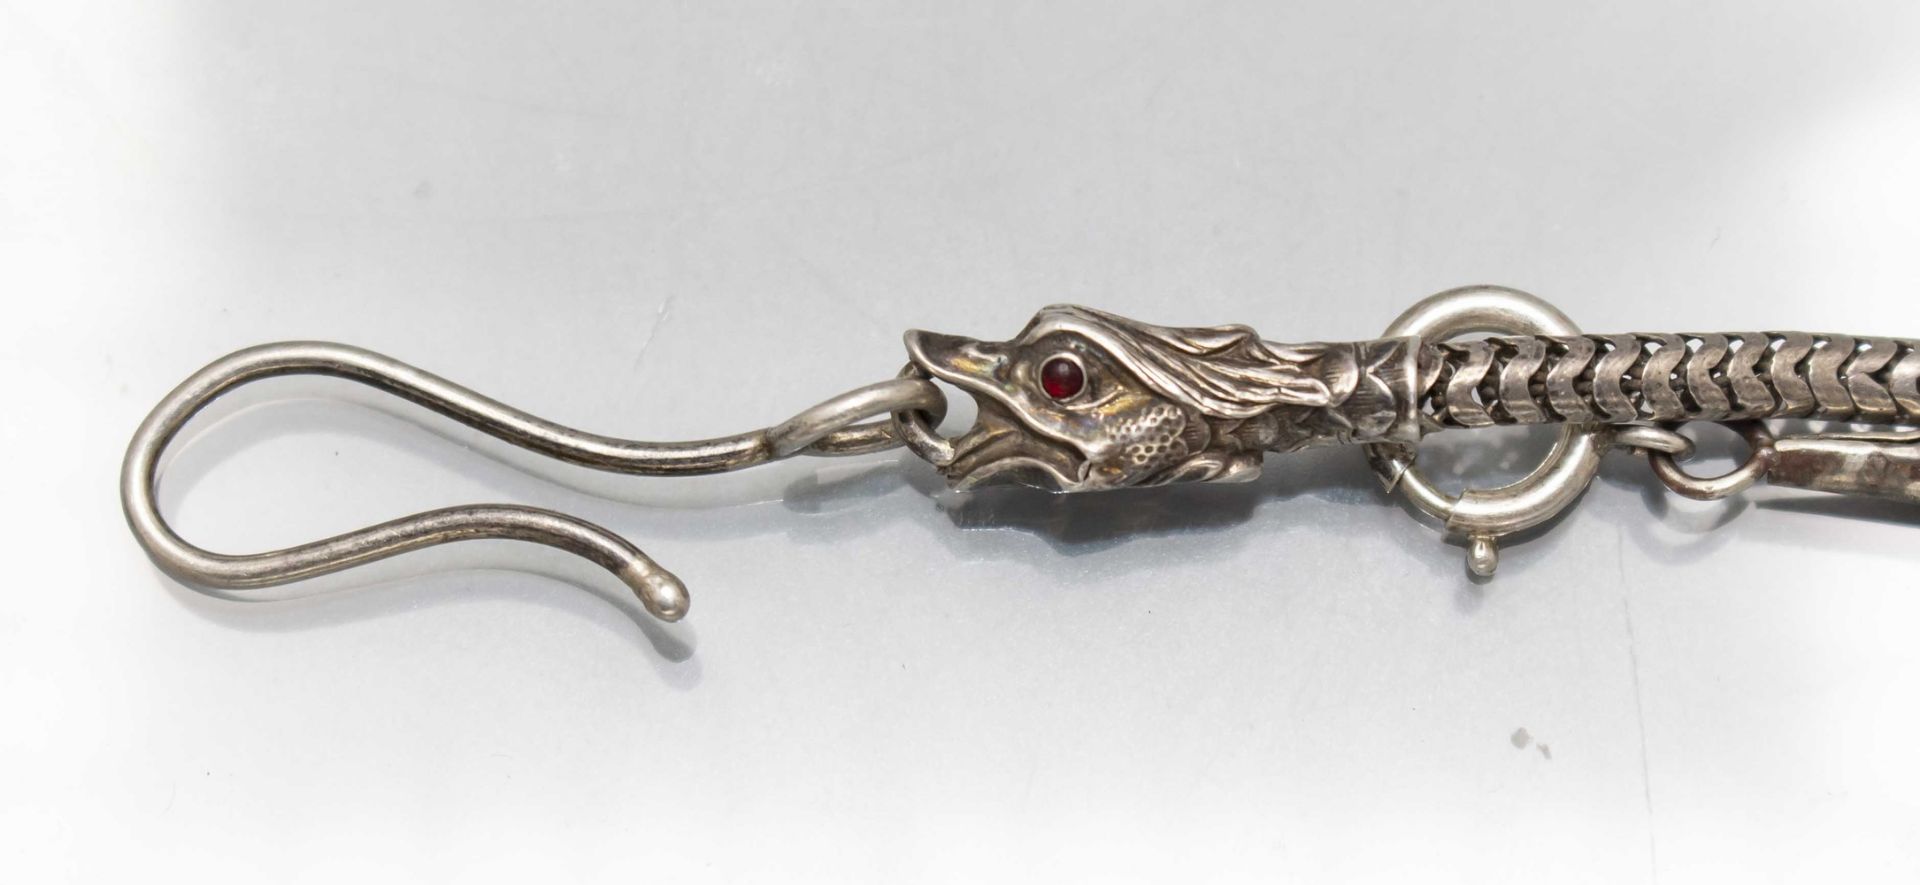 Schlangen-Armband/Kette/Chatelaine / A silver snake bracelet/chain, um 1900 - Image 3 of 3